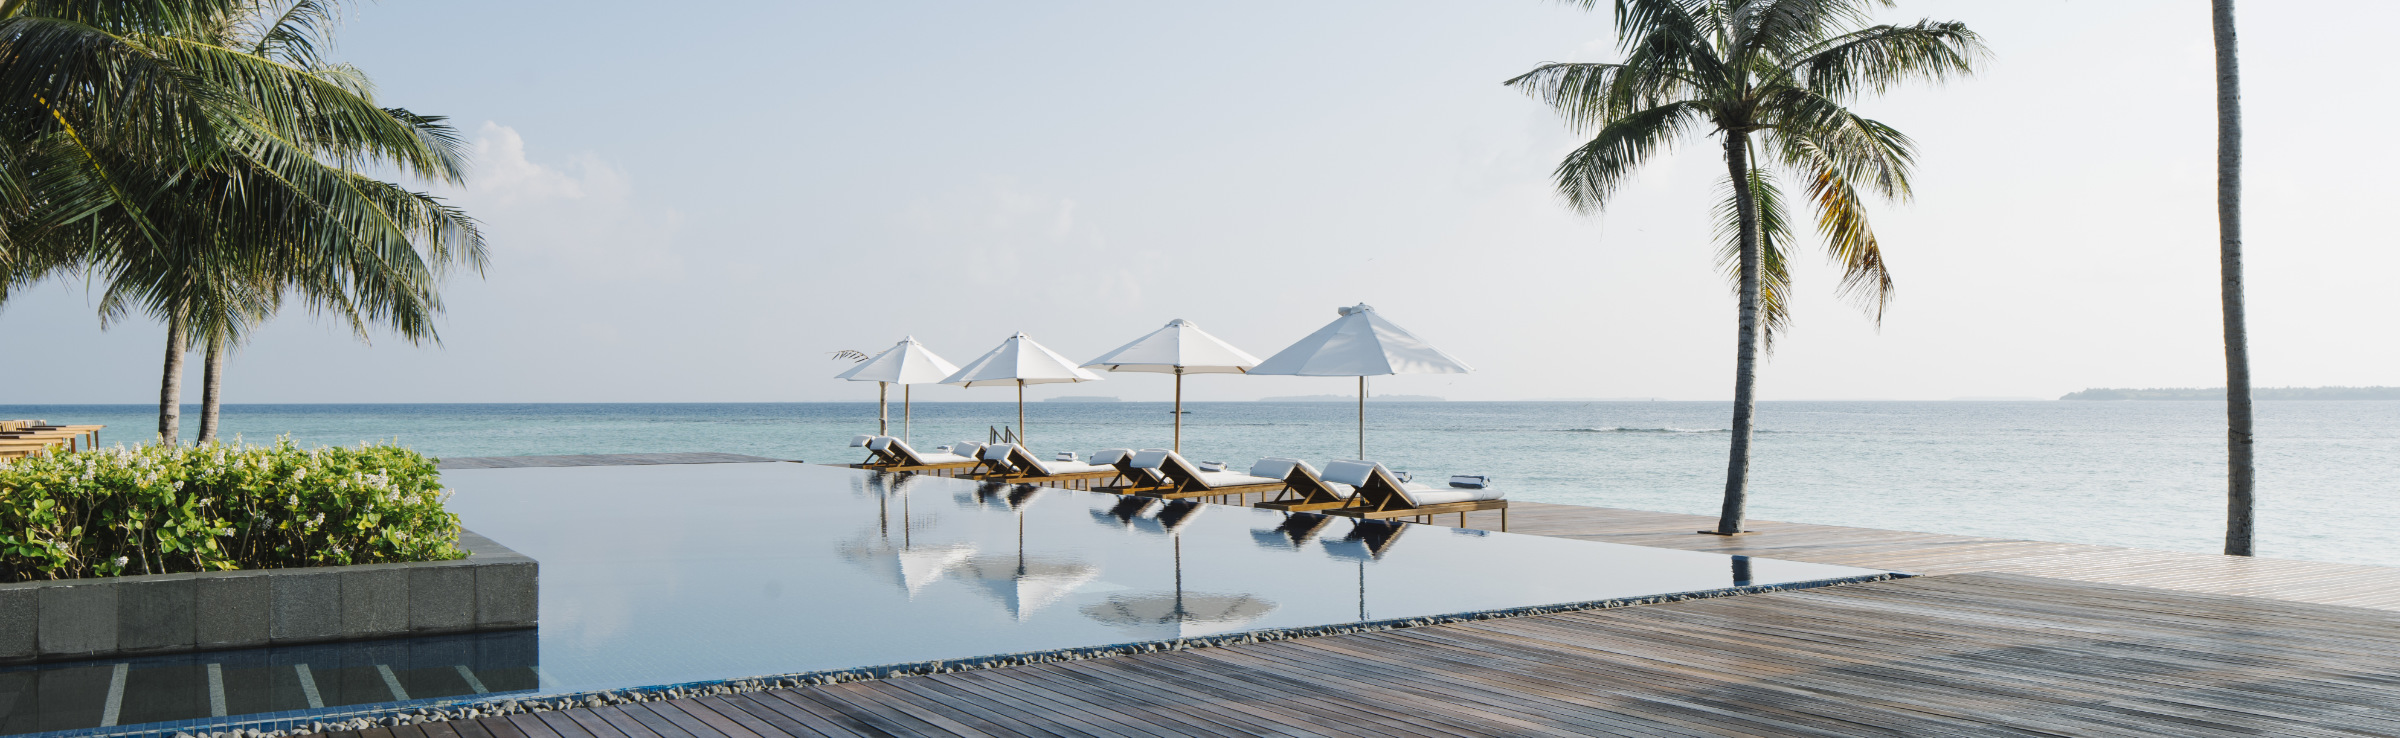 Noku Maldives, a Preferred Hotels & Resorts property